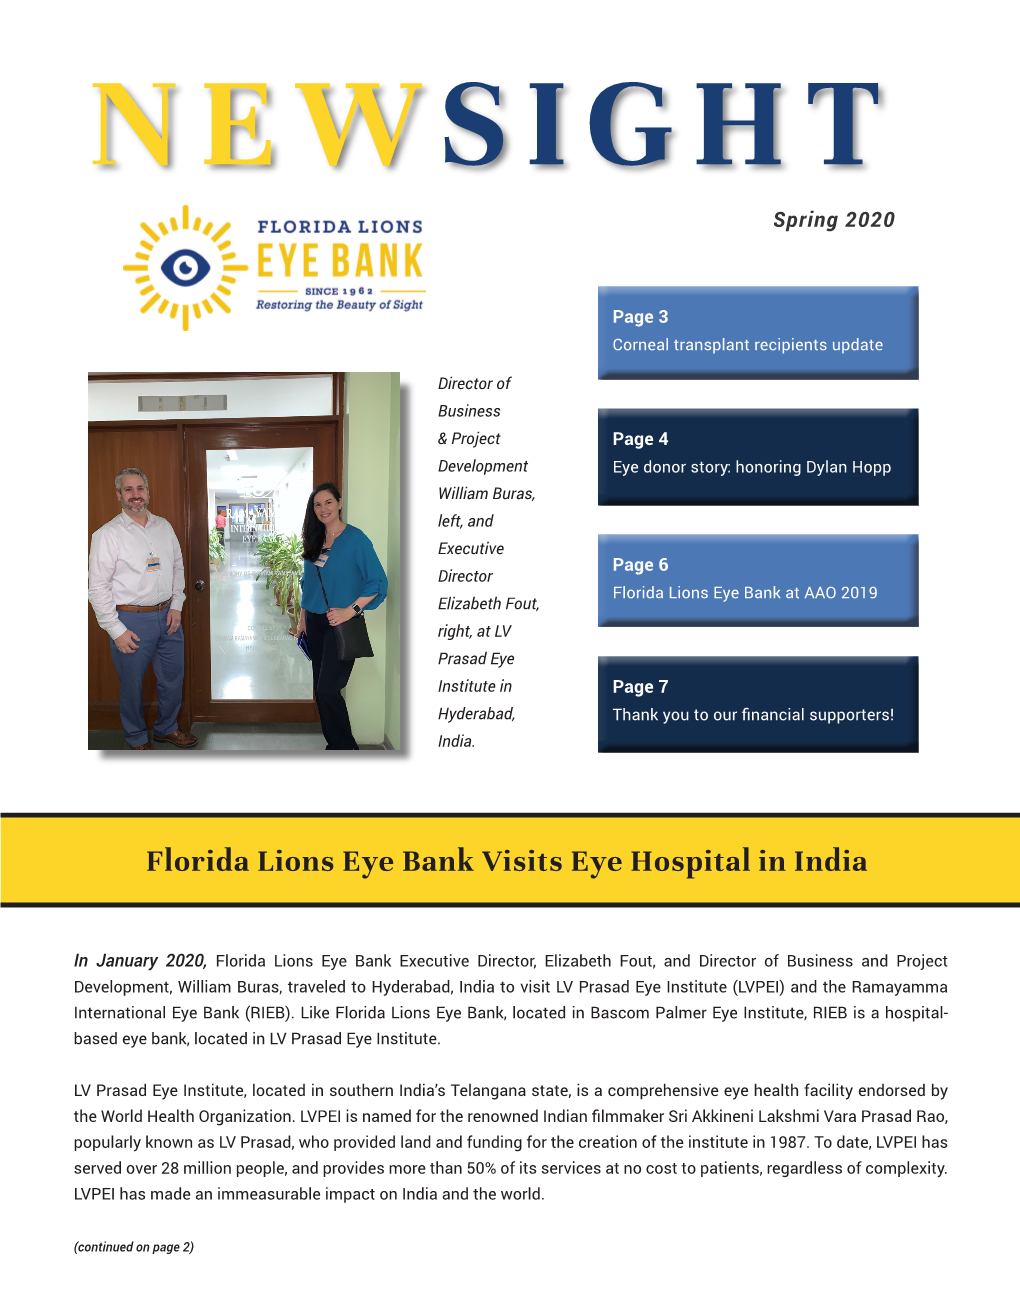 Florida Lions Eye Bank Visits Eye Hospital in India